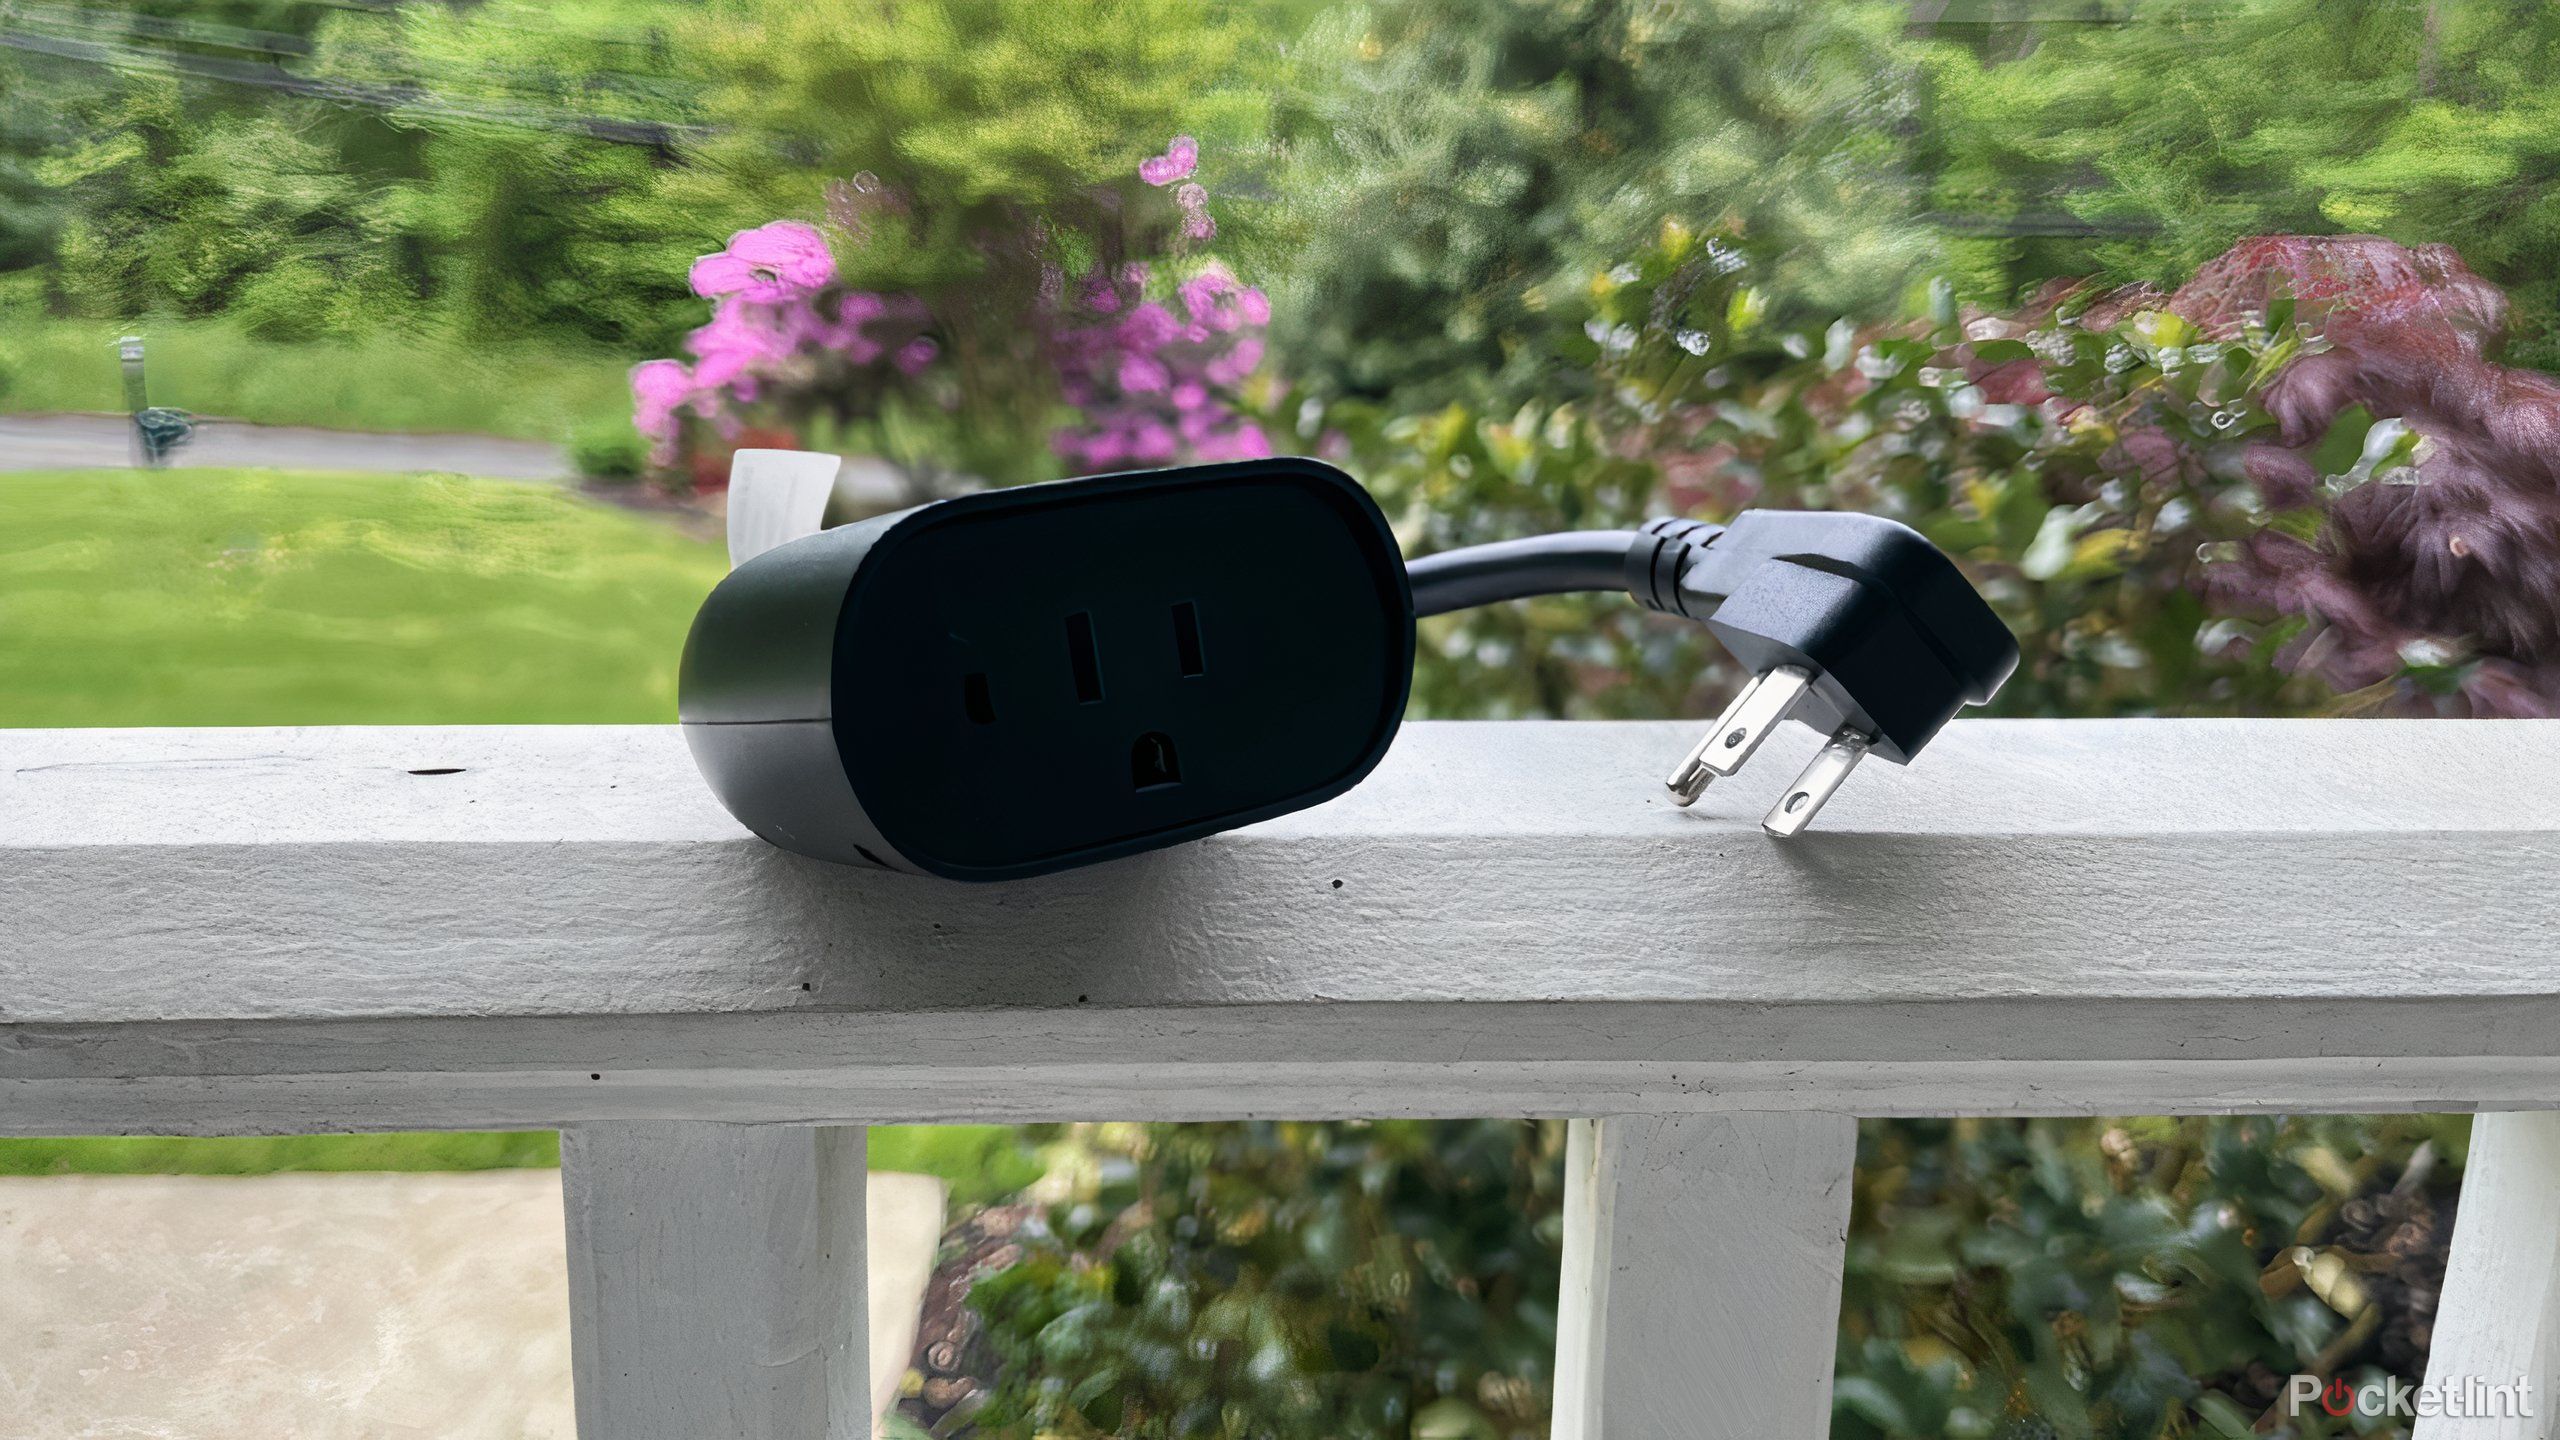 Kasa Outdoor Smart Dimmer Plug outside